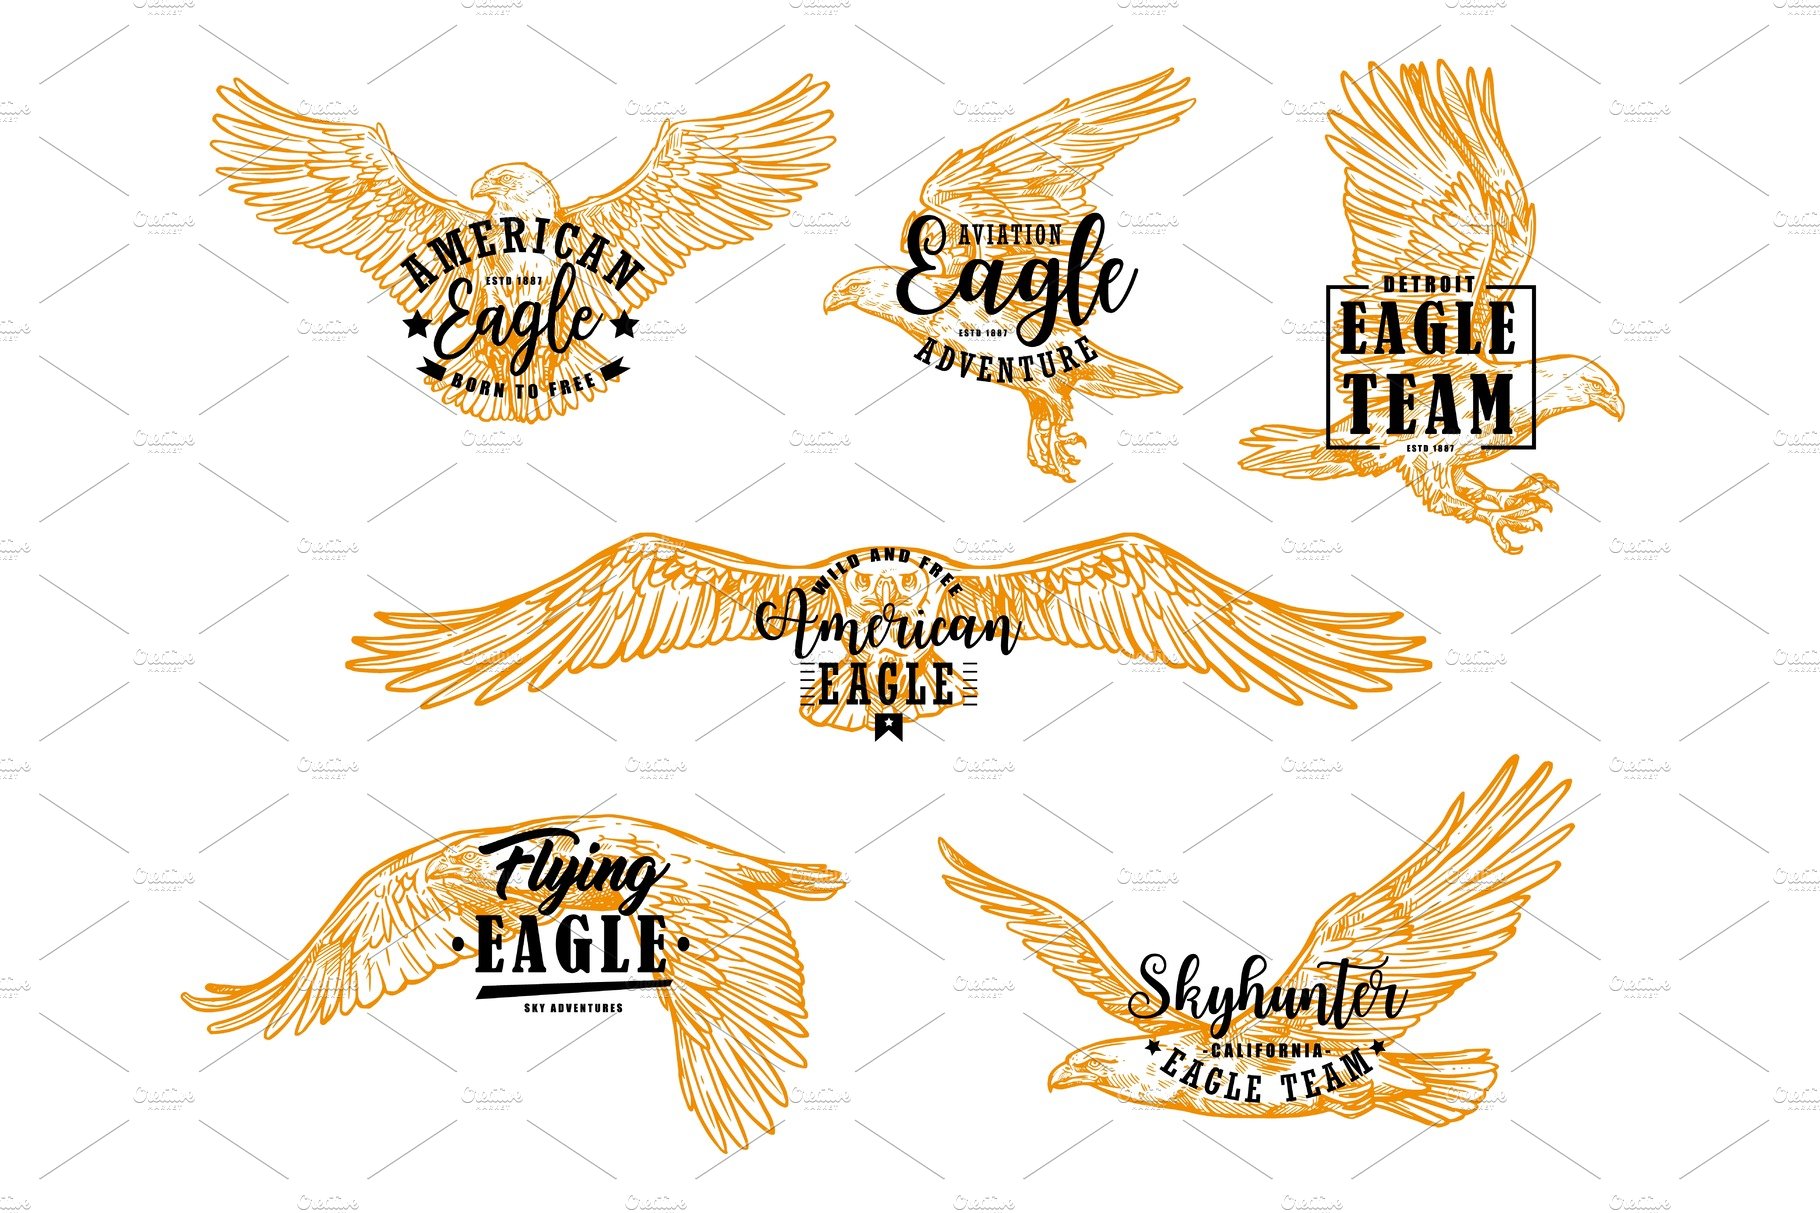 Eagle, hawk or falcon letterings cover image.